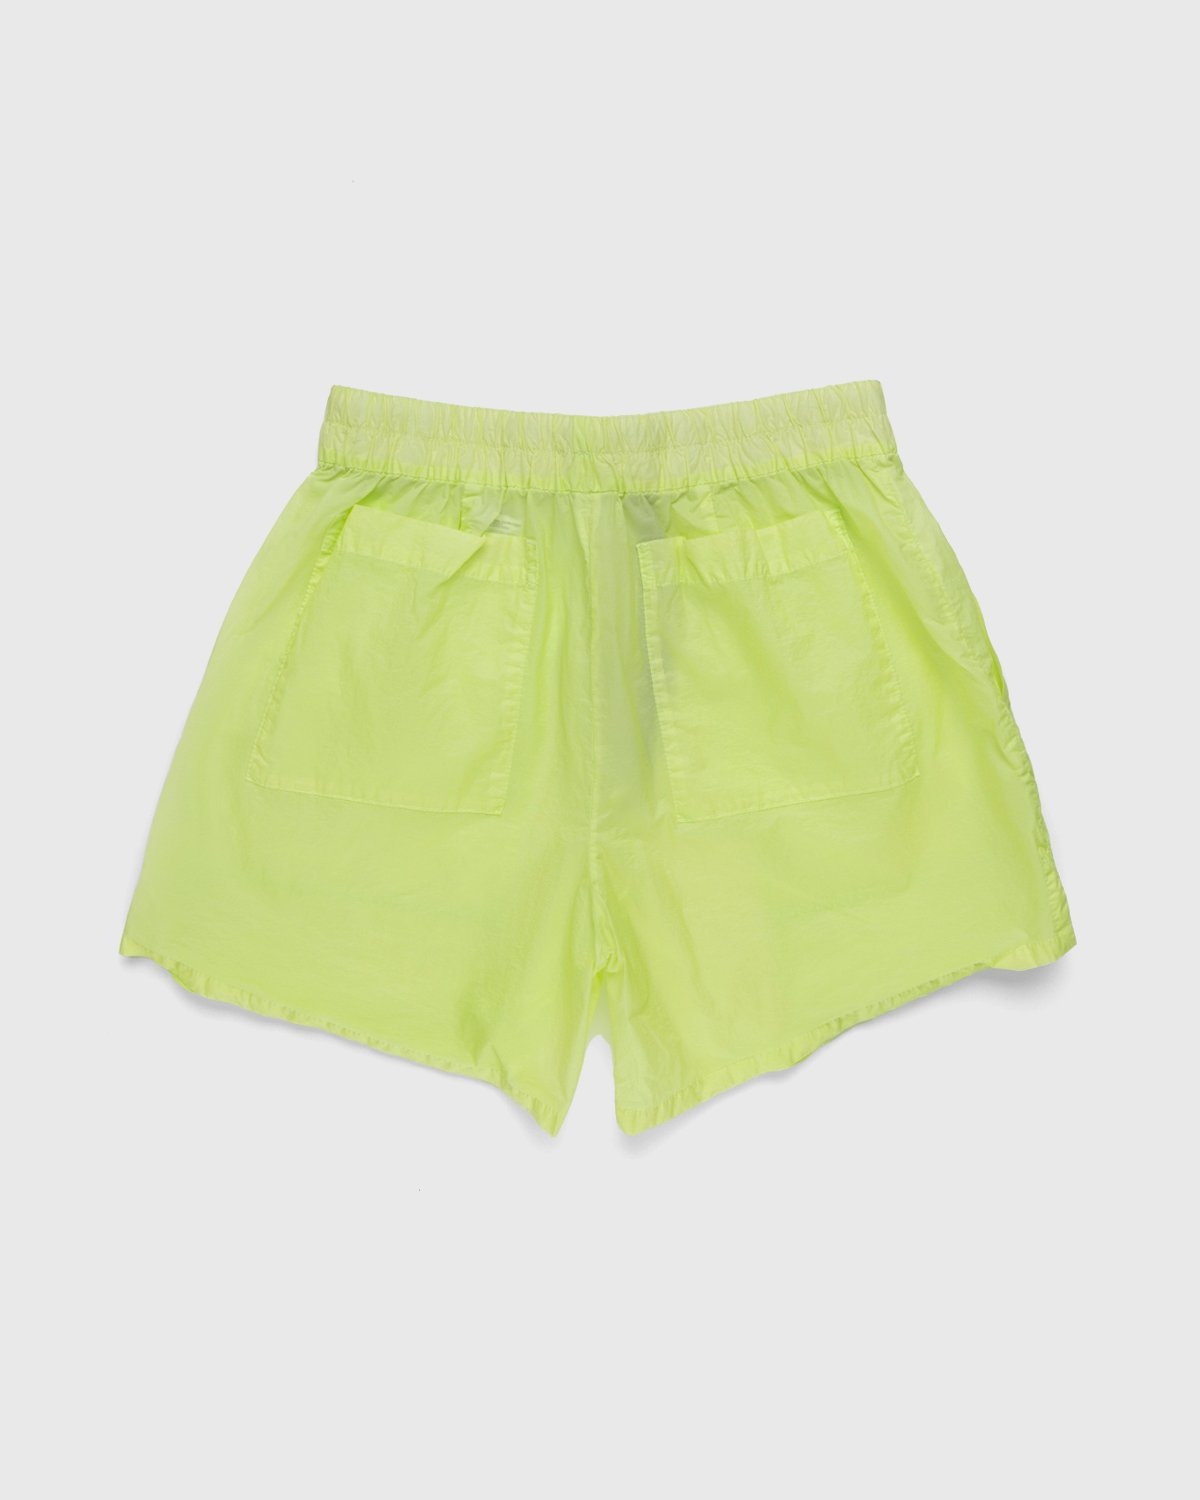 Dries van Noten – Pooles Shorts Lime - Shorts - Green - Image 2